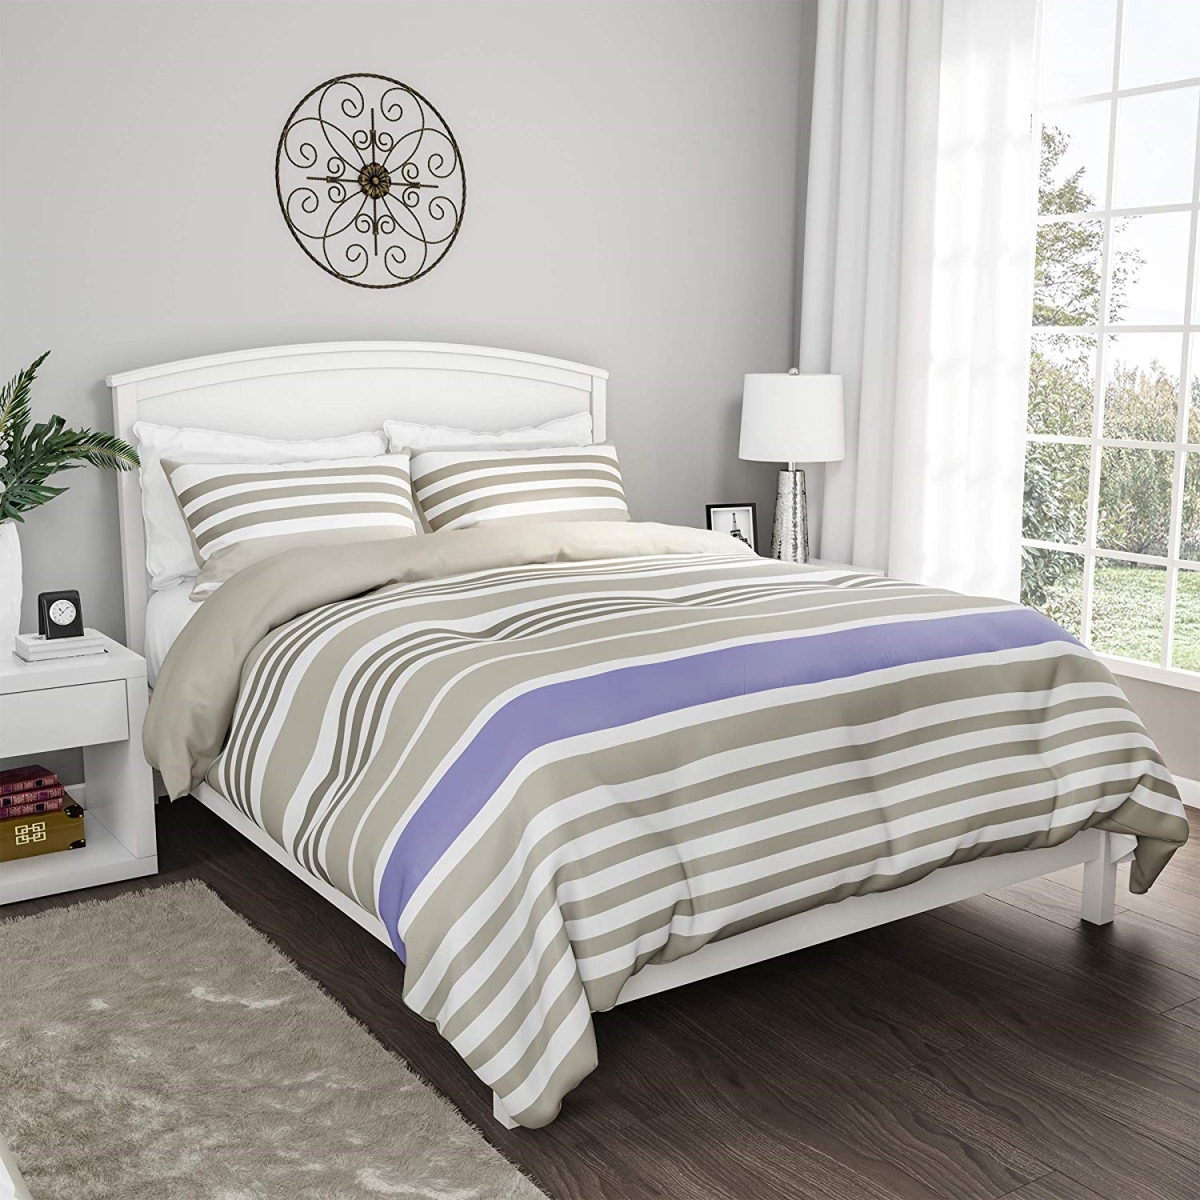 66a-78490 Microfiber Seaside Lavender Striped Down Alternative All-season Blanket With Shams 3 Piece Comforter Set - King Size